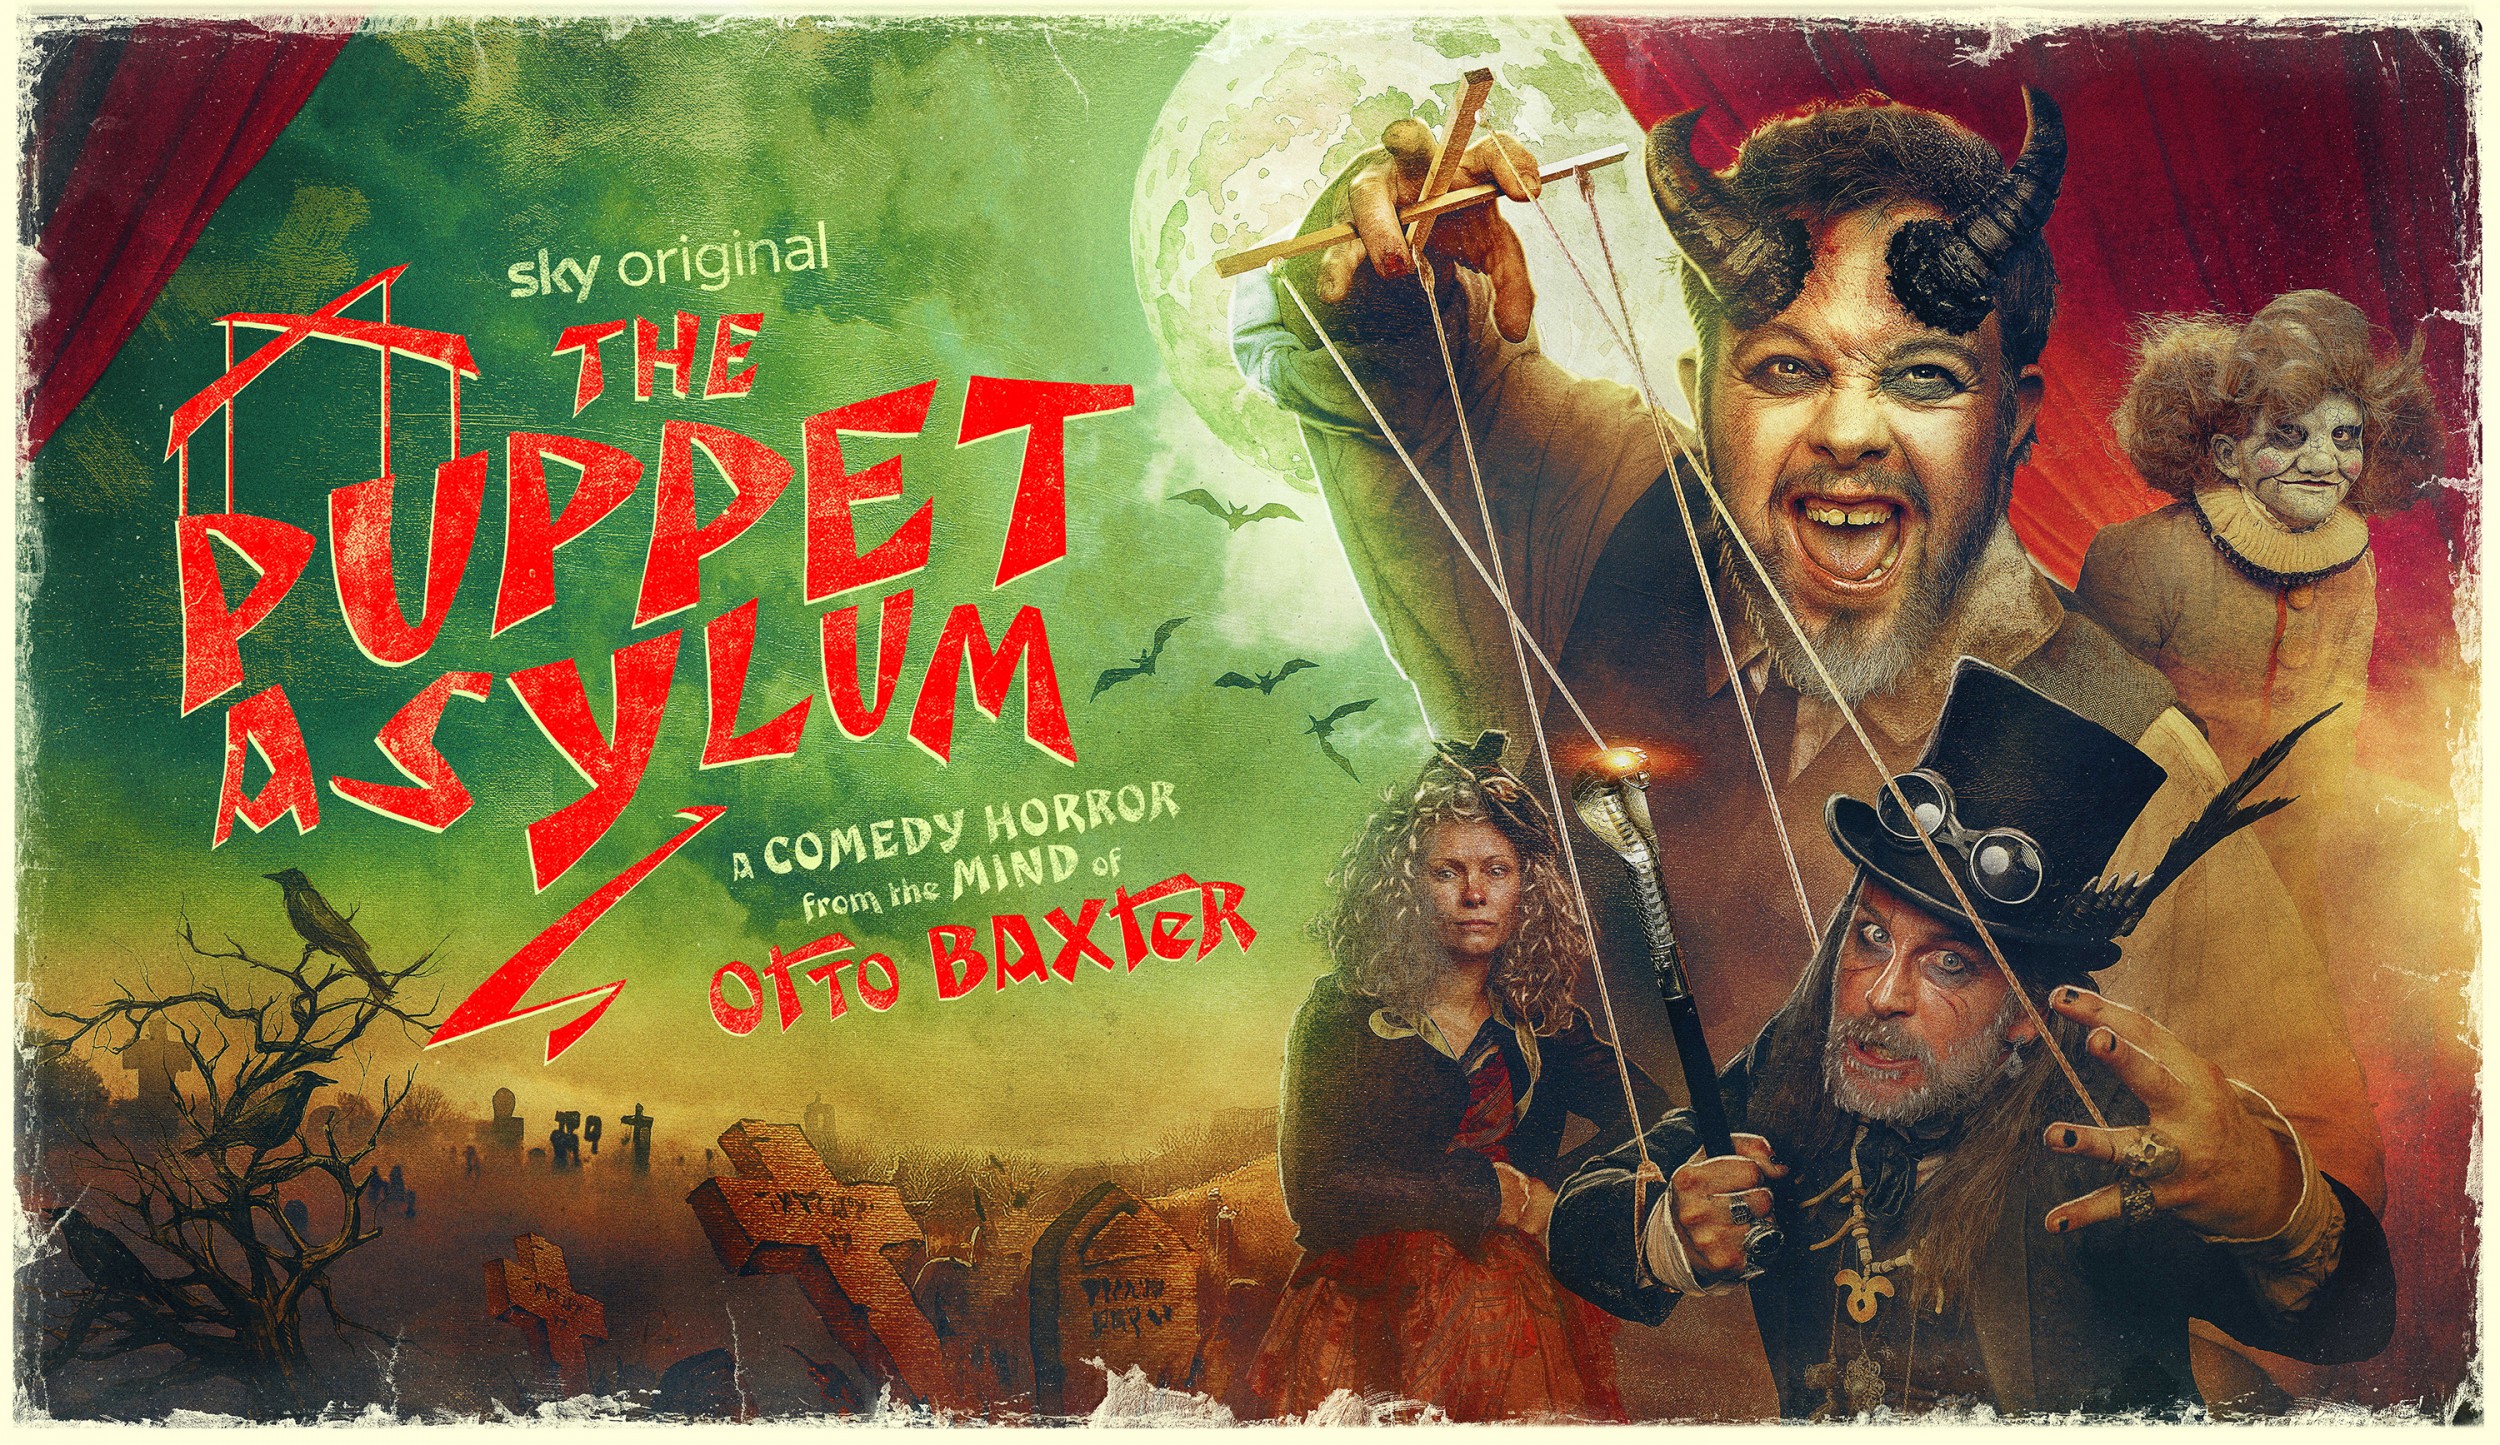 Mega Sized Movie Poster Image for The Puppet Asylum